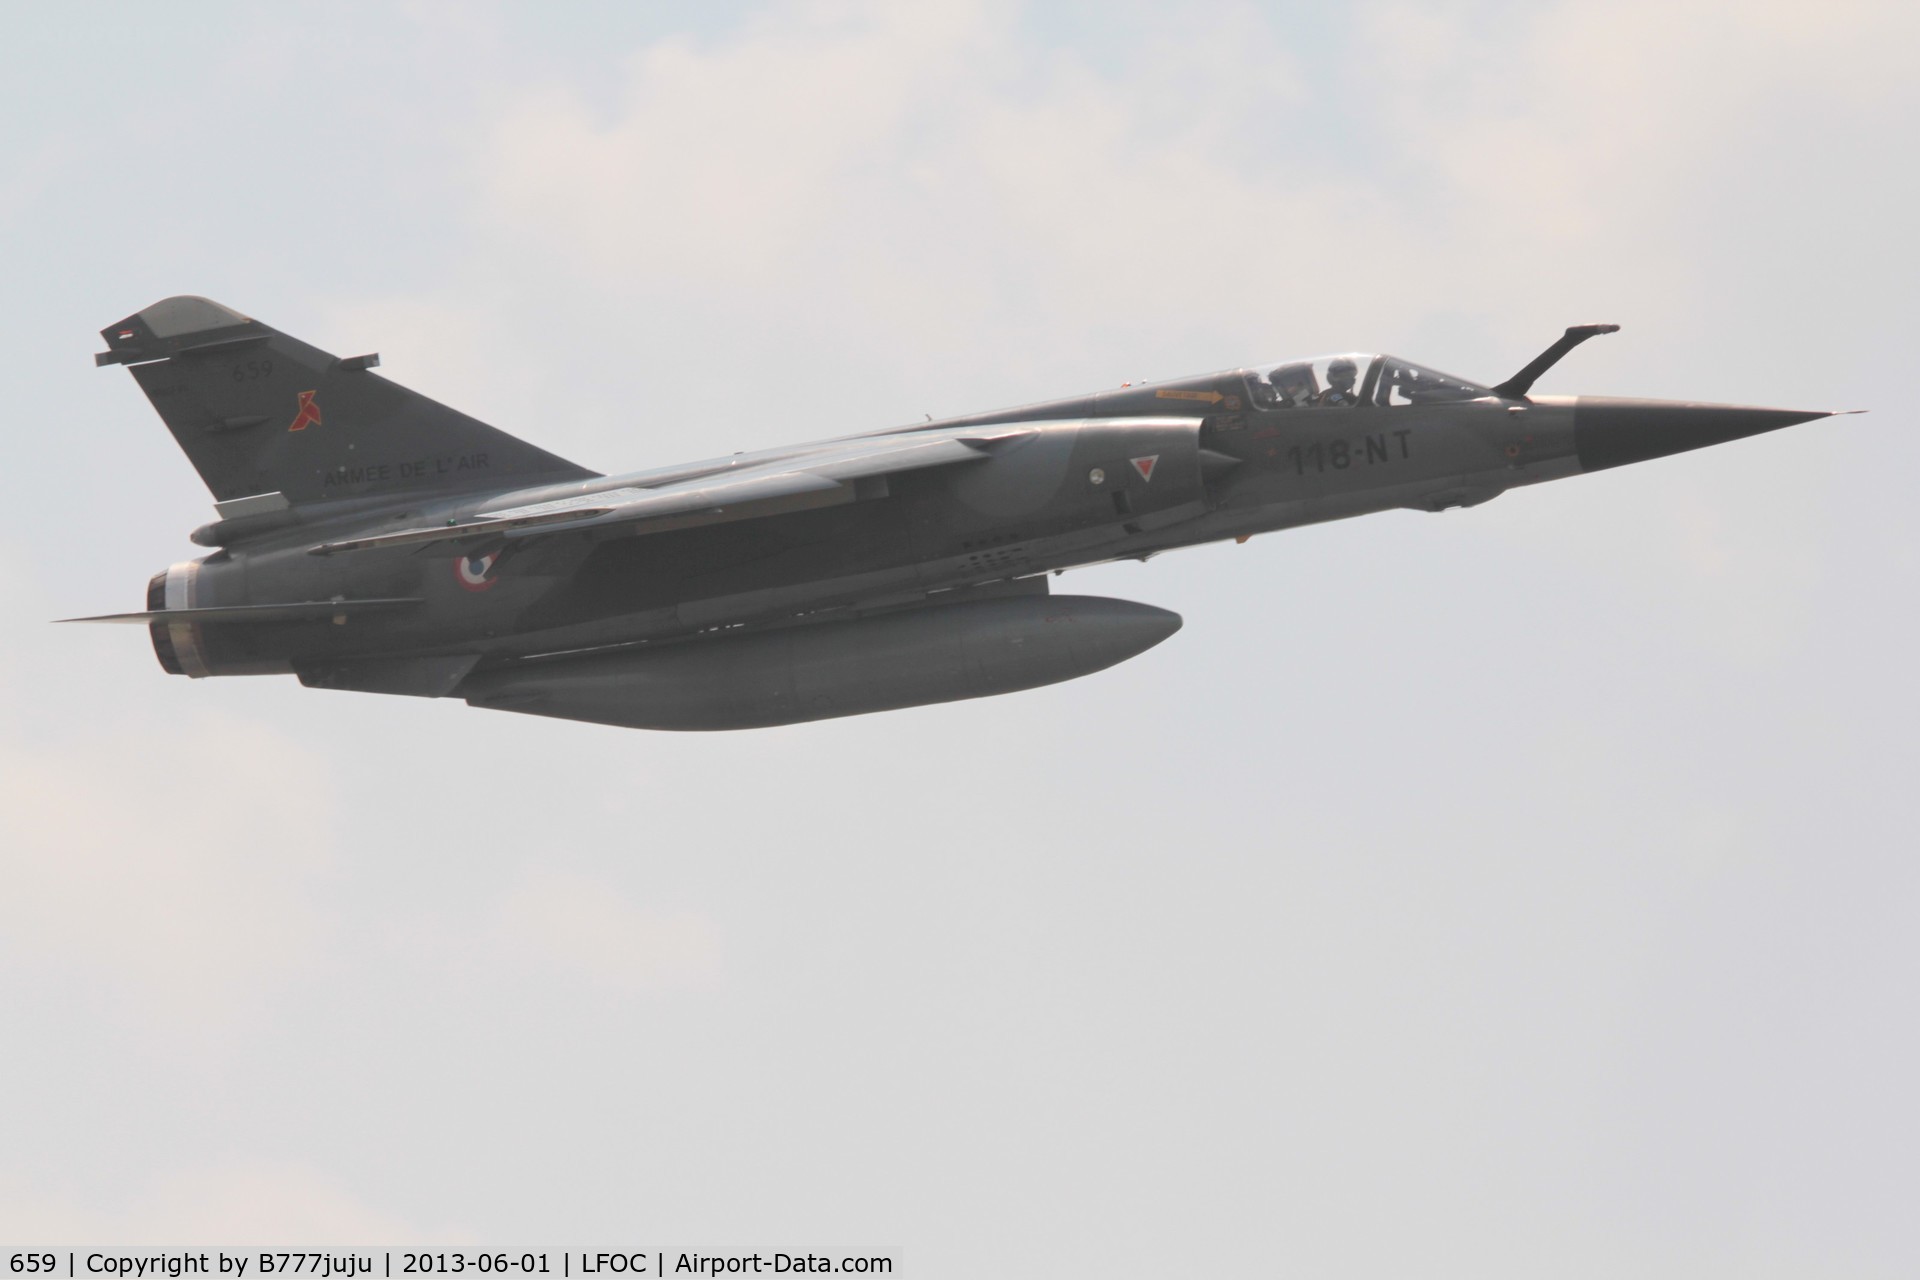 659, Dassault Mirage F.1CR C/N Not found 659, with new code 118-NT